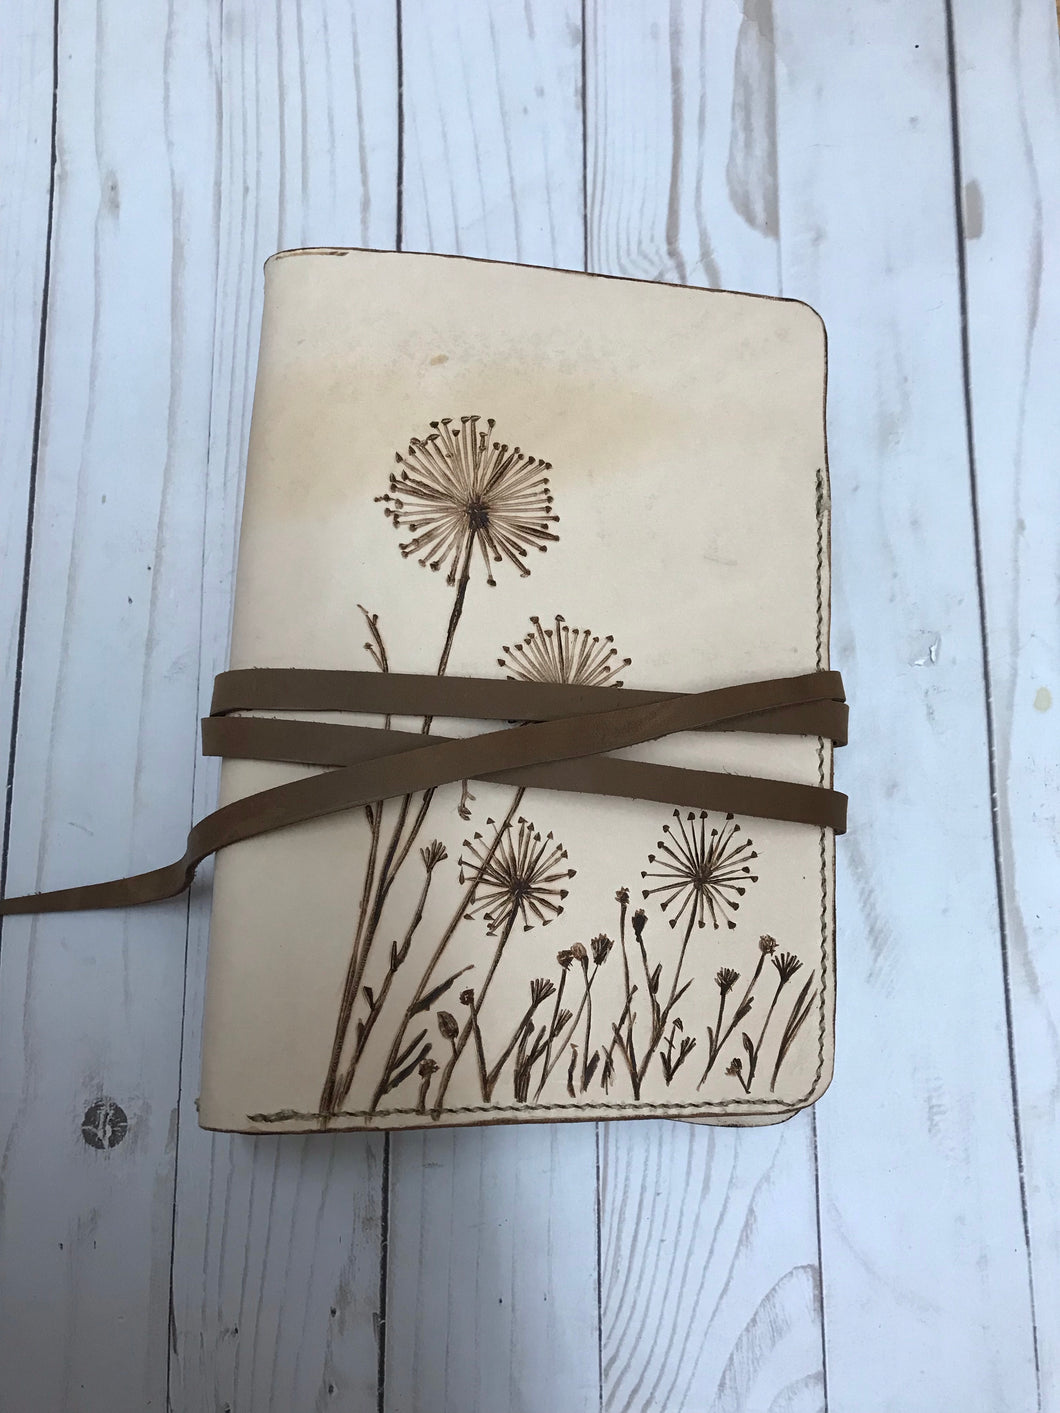 Dandelion journal